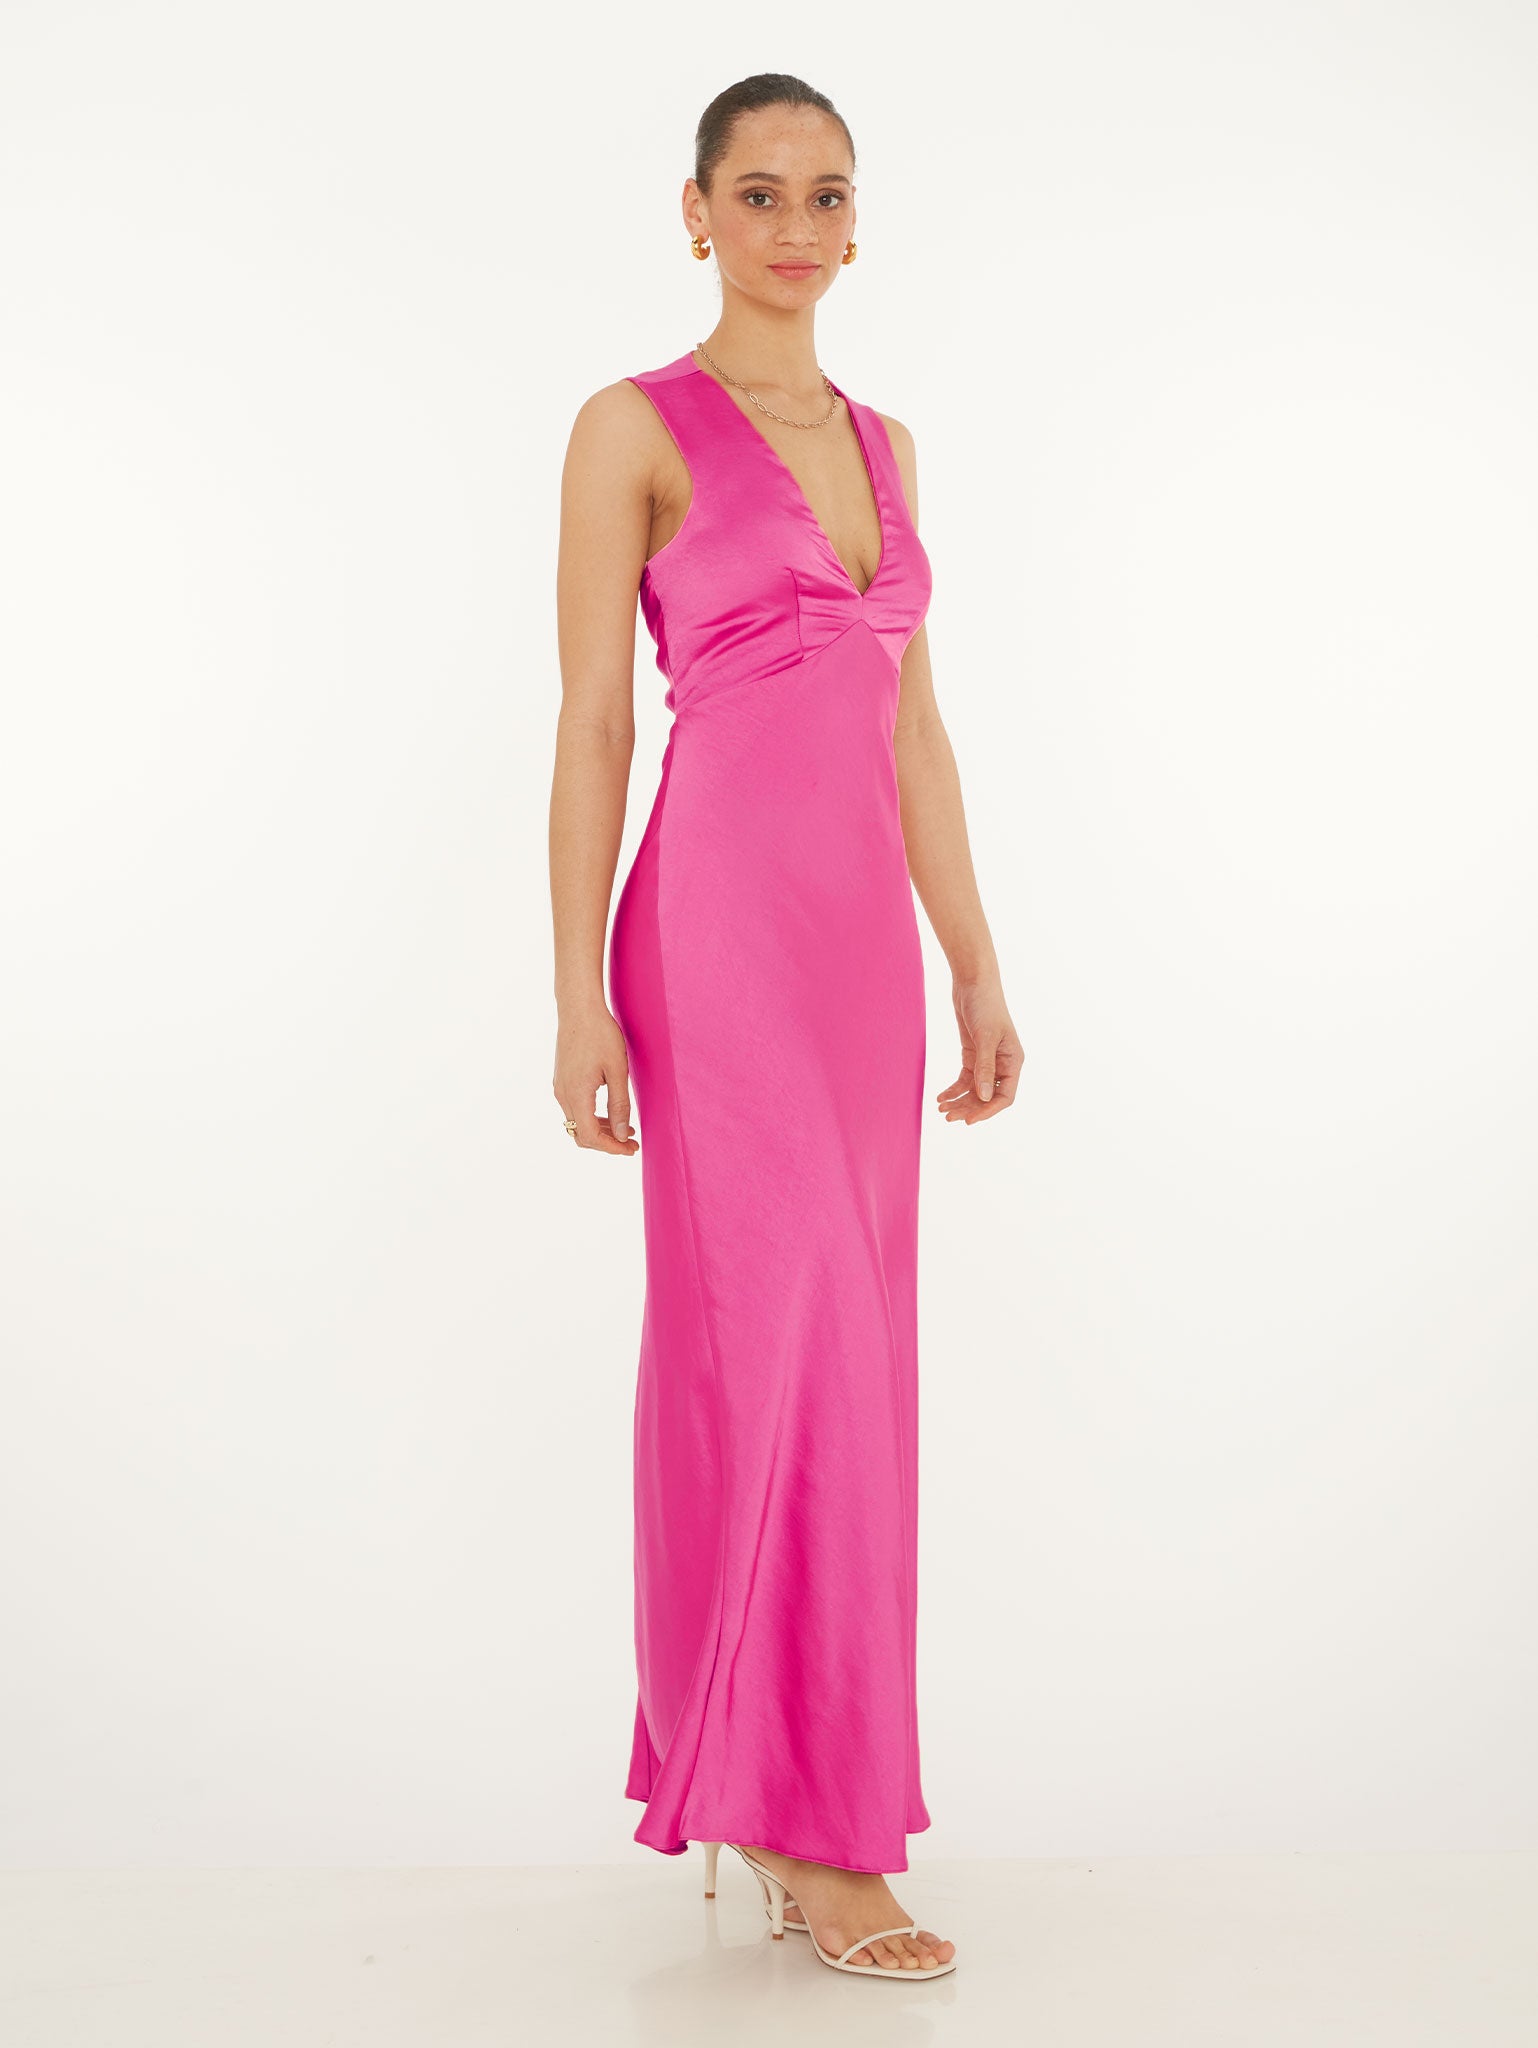 Nova Tie Back Dress in Pink | OMNES | Dresses | Occasion wear ...